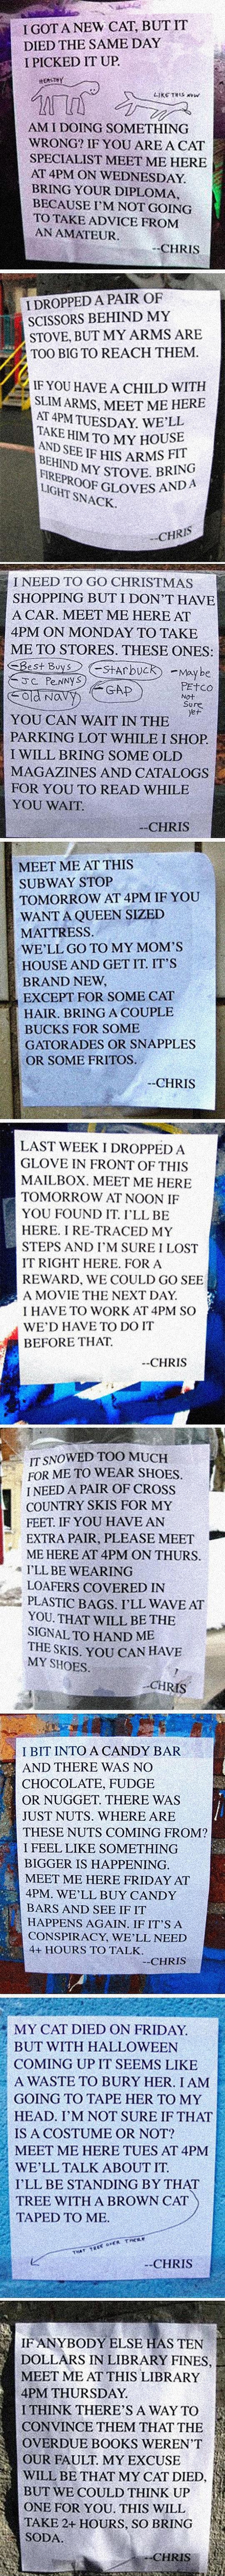 Dammit Chris.